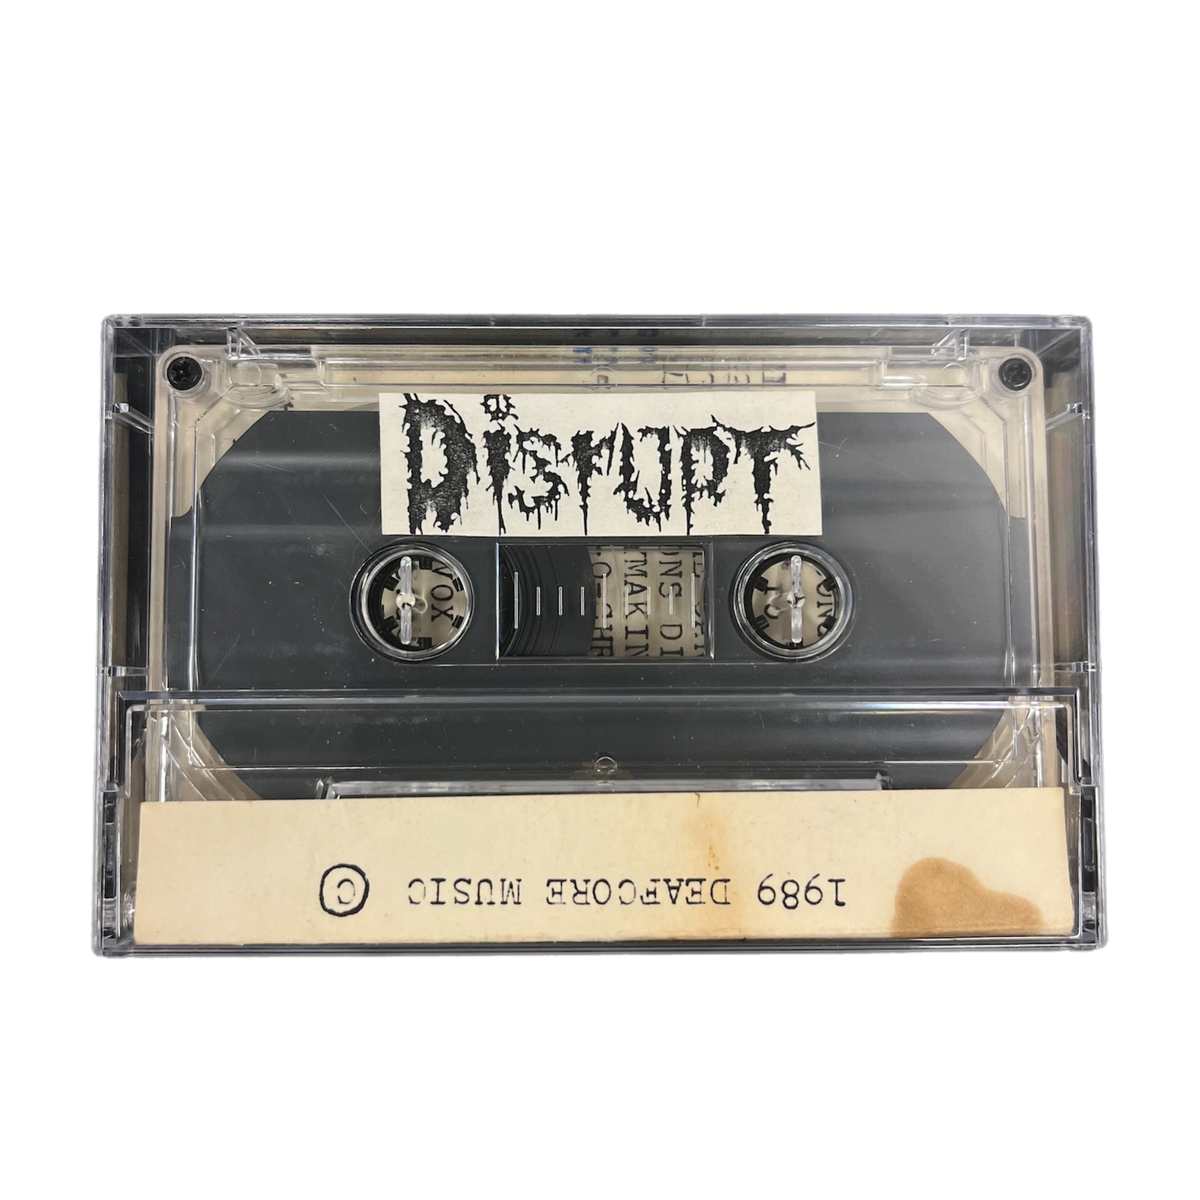 Vintage Disrupt &quot;5 Song&quot; Demo Tape